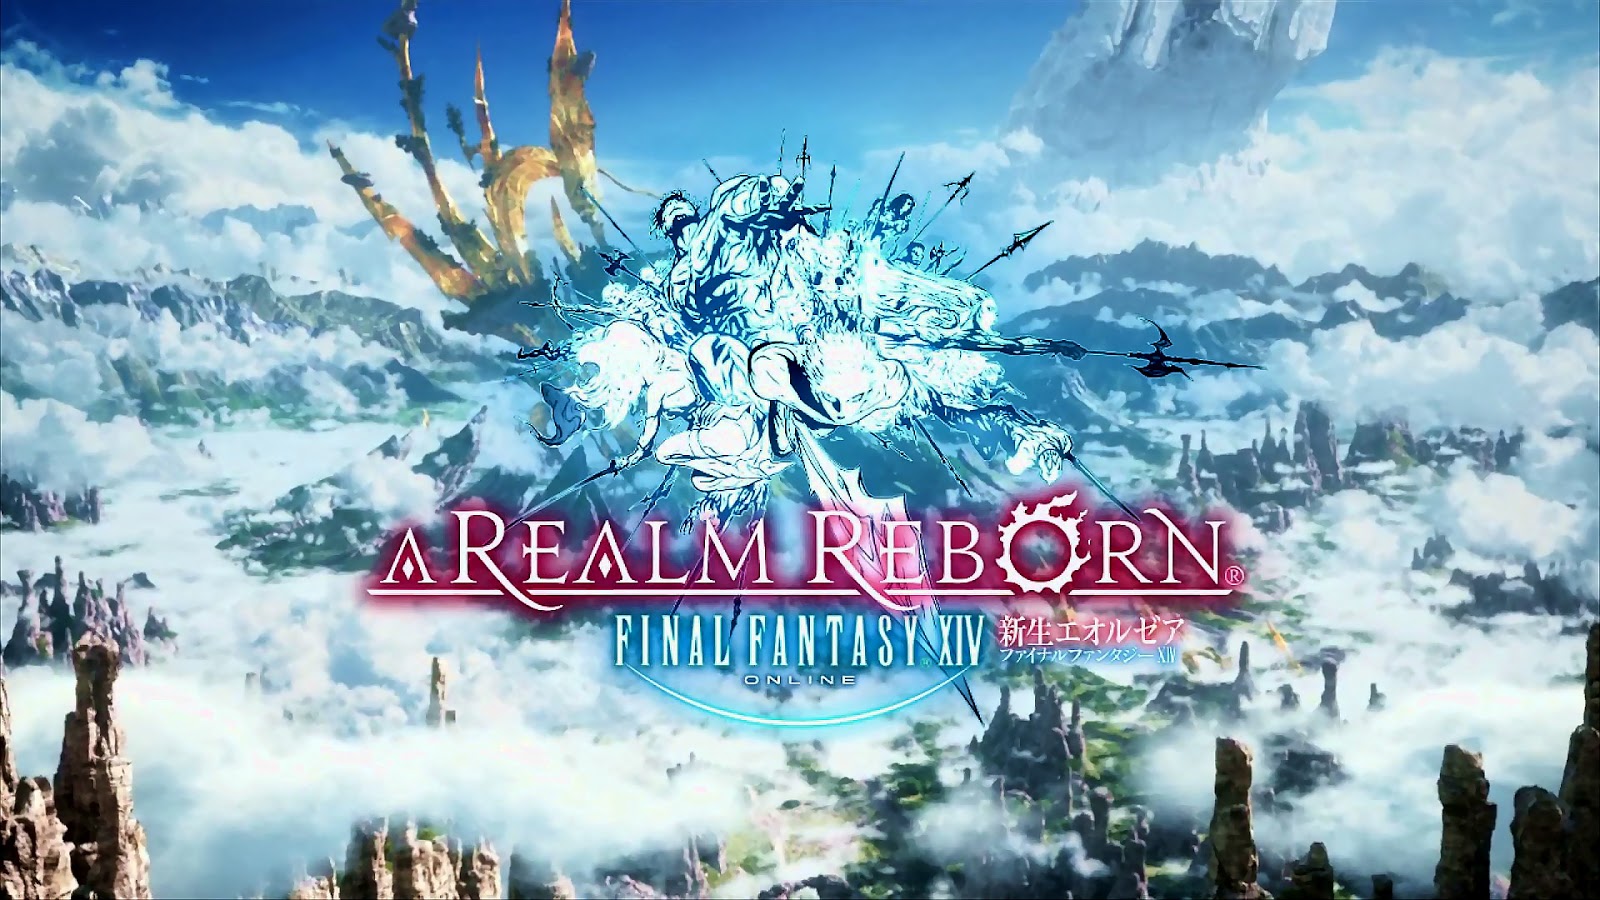 Final Fantasy XIV: A Realm Reborn #17